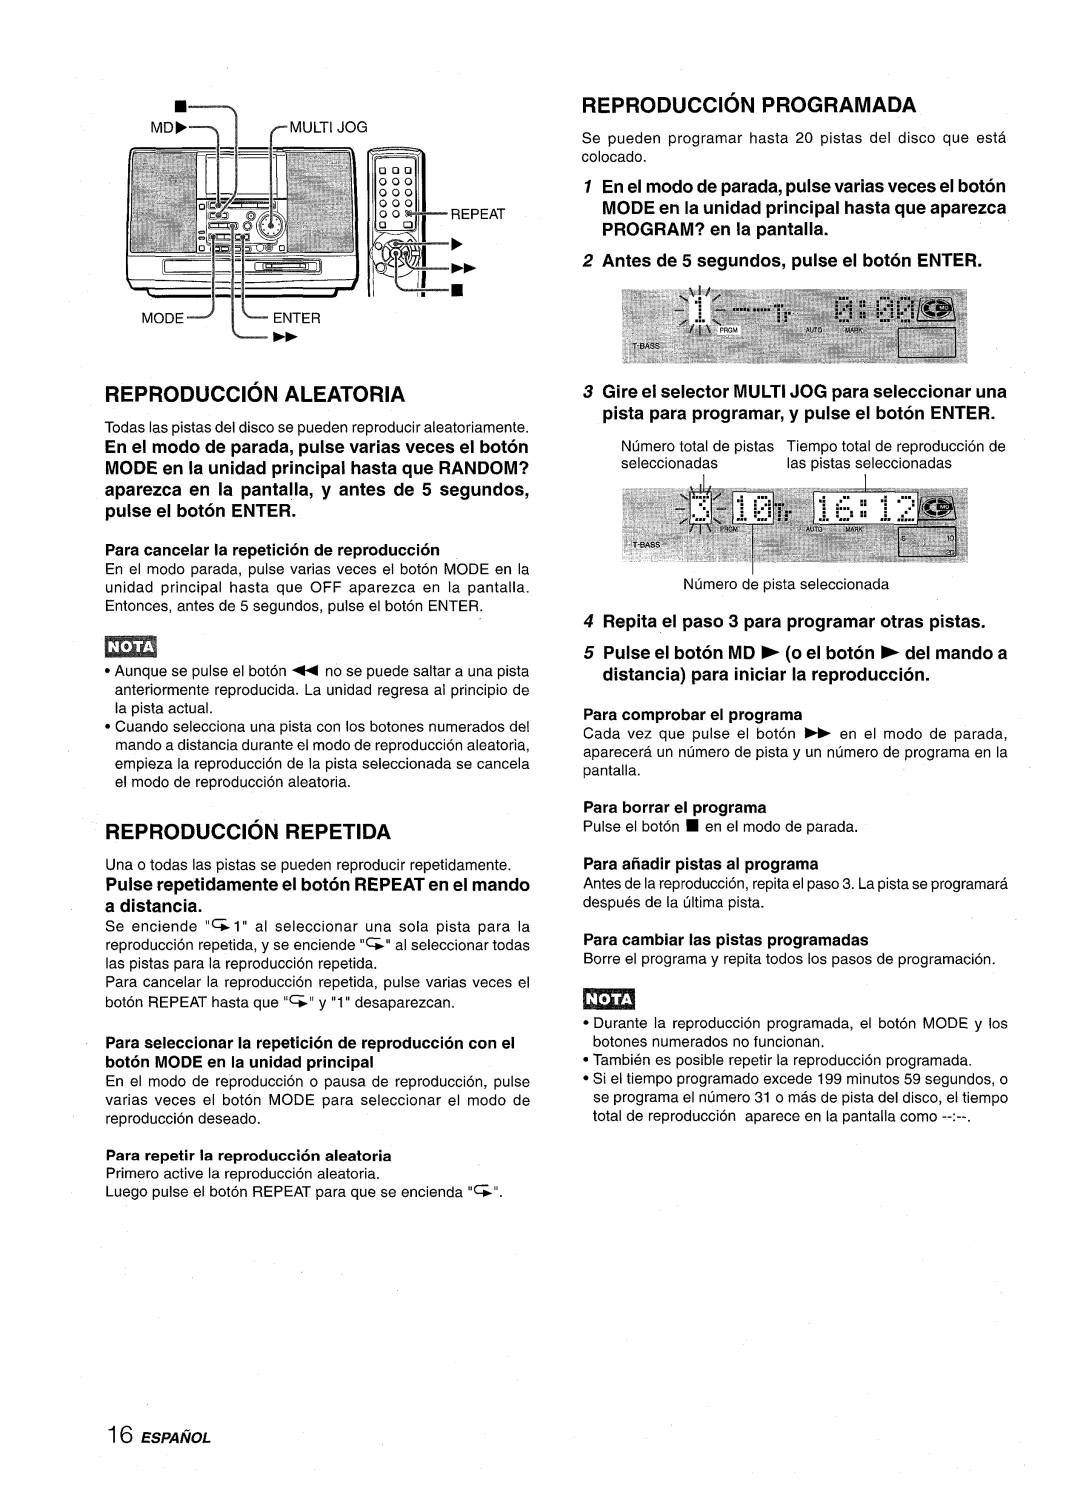 Aiwa CSD-MD50 manual Reproduction Programada, Reproduction Aleatoria, Reproduction Repetida, P000. 000 000, Espanol 